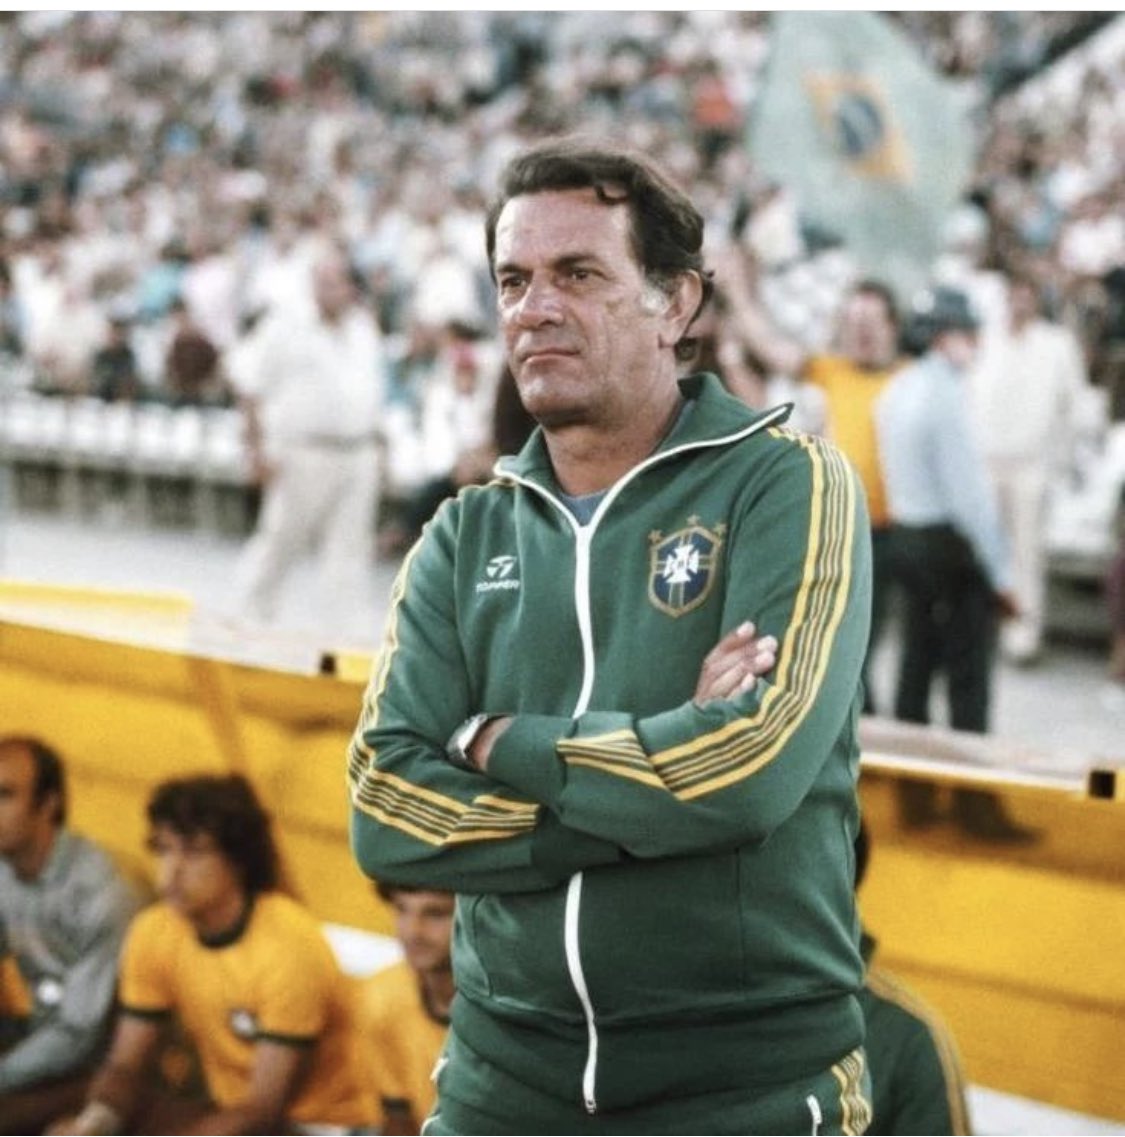 #TeleSantana #brazil 1982